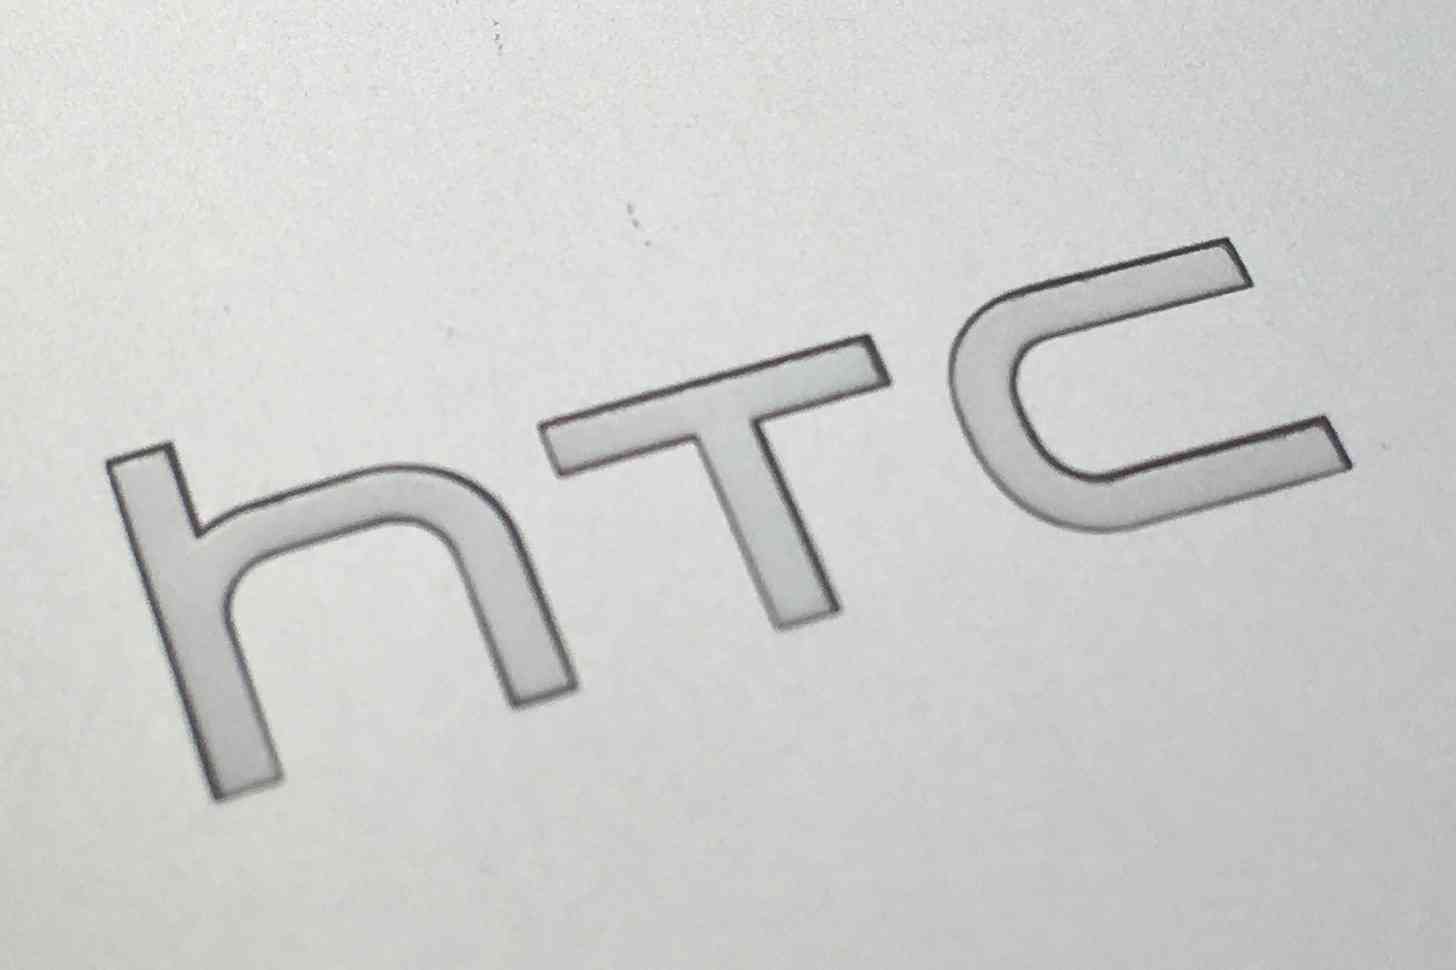 HTC logo One M7 rear